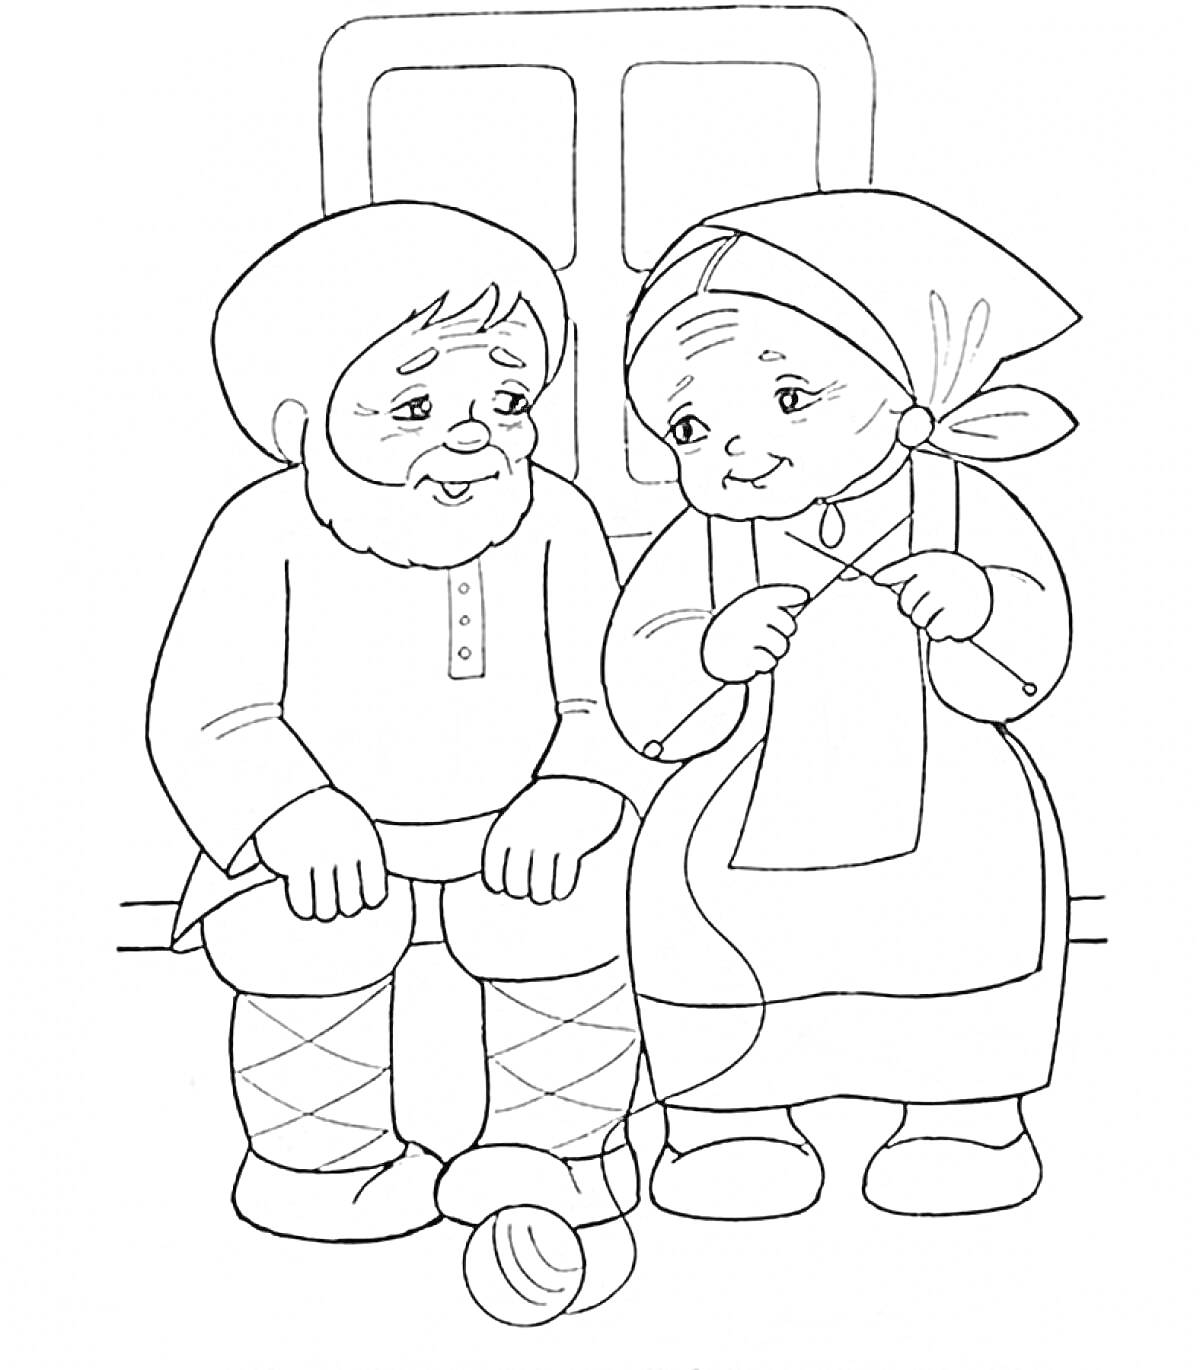 Дед и бабушка сидят на скамейке, держа вязание